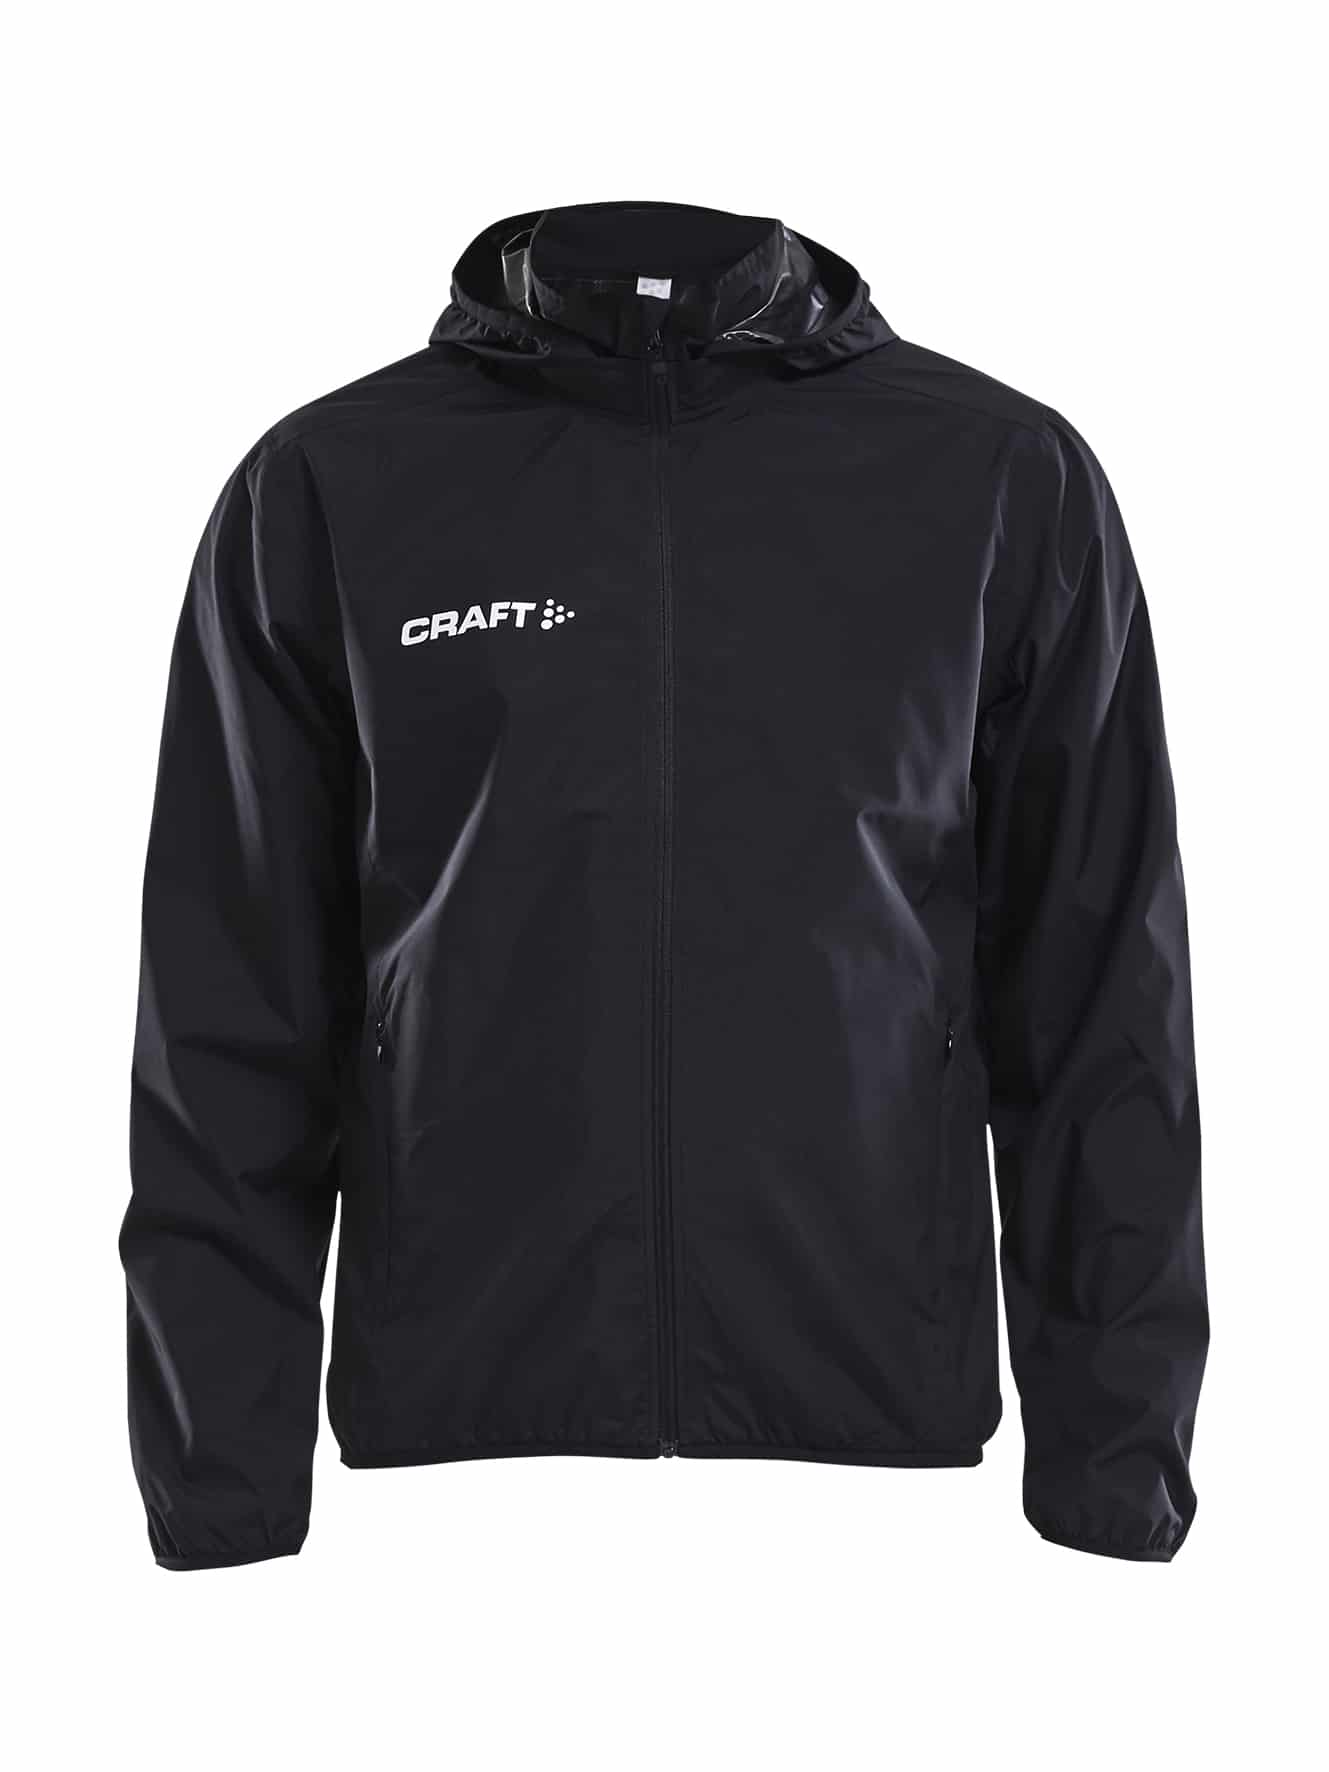 Craft - Jacket Rain Maend - Black XL